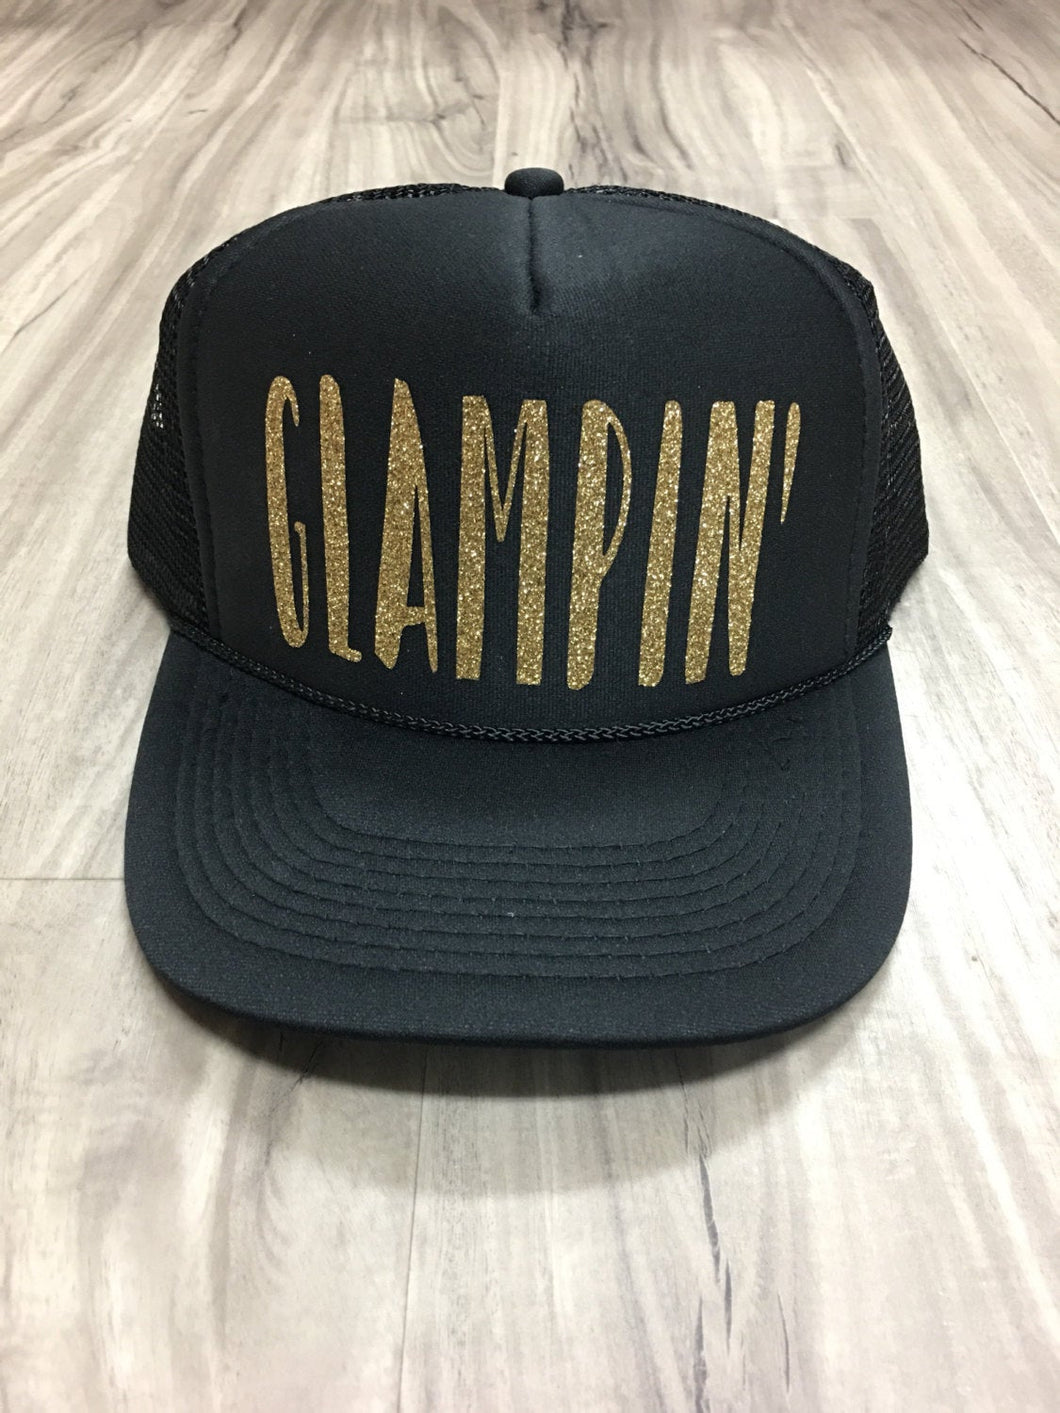 Glampin Trucker Hat